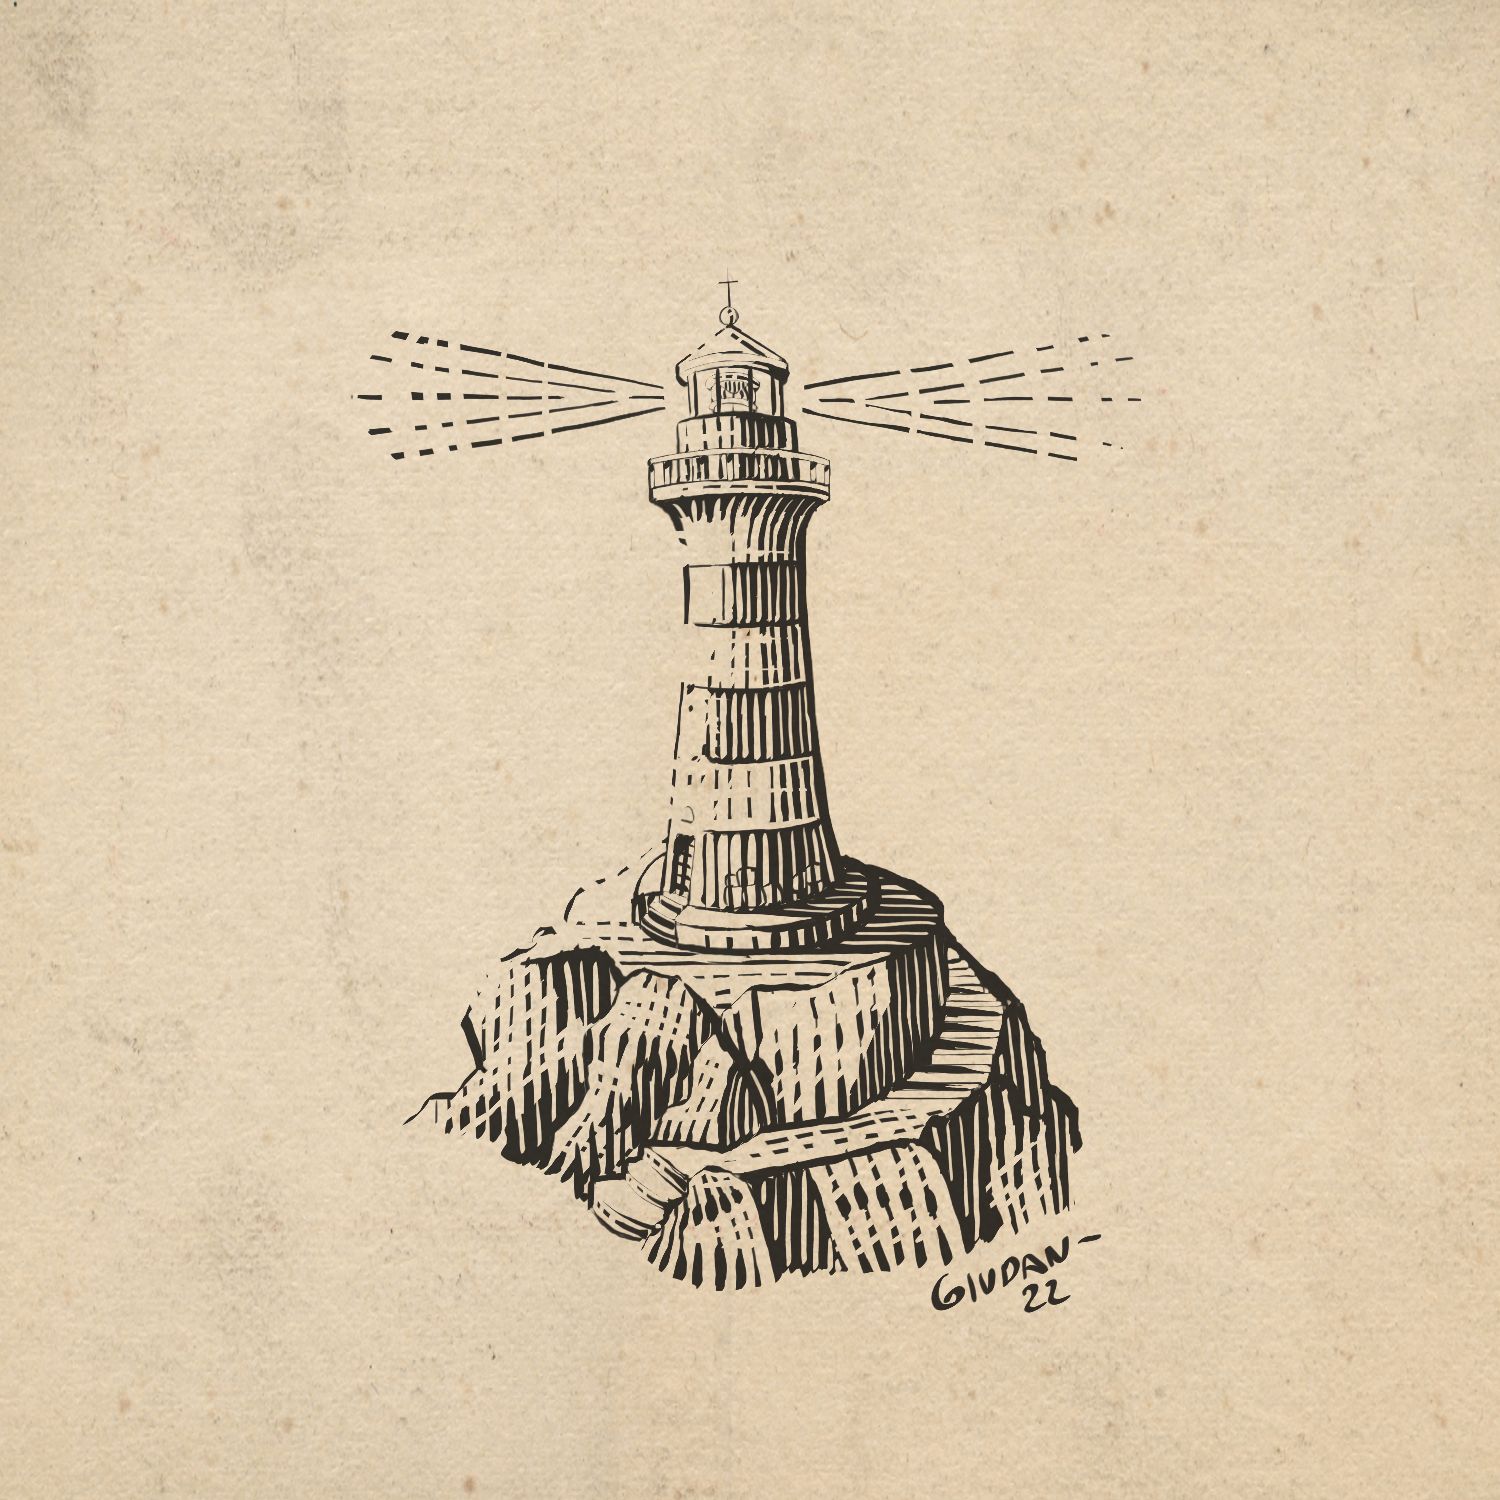 Imaginary lighthouse